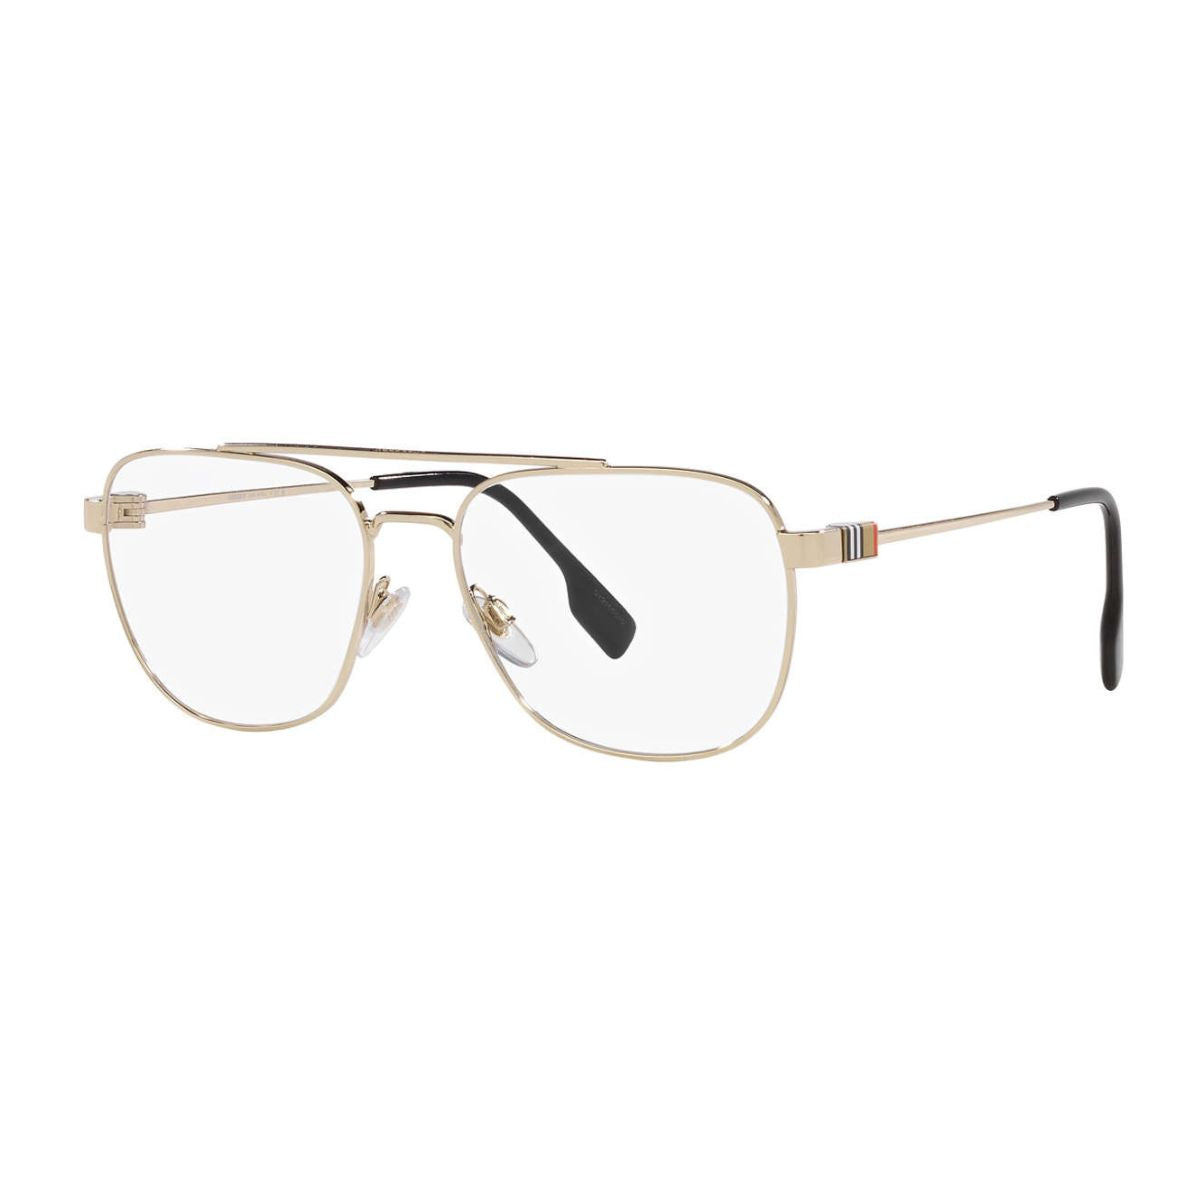 "burberry 1377 1109 trendy eyewear & power glasses frame for mens at optorium"